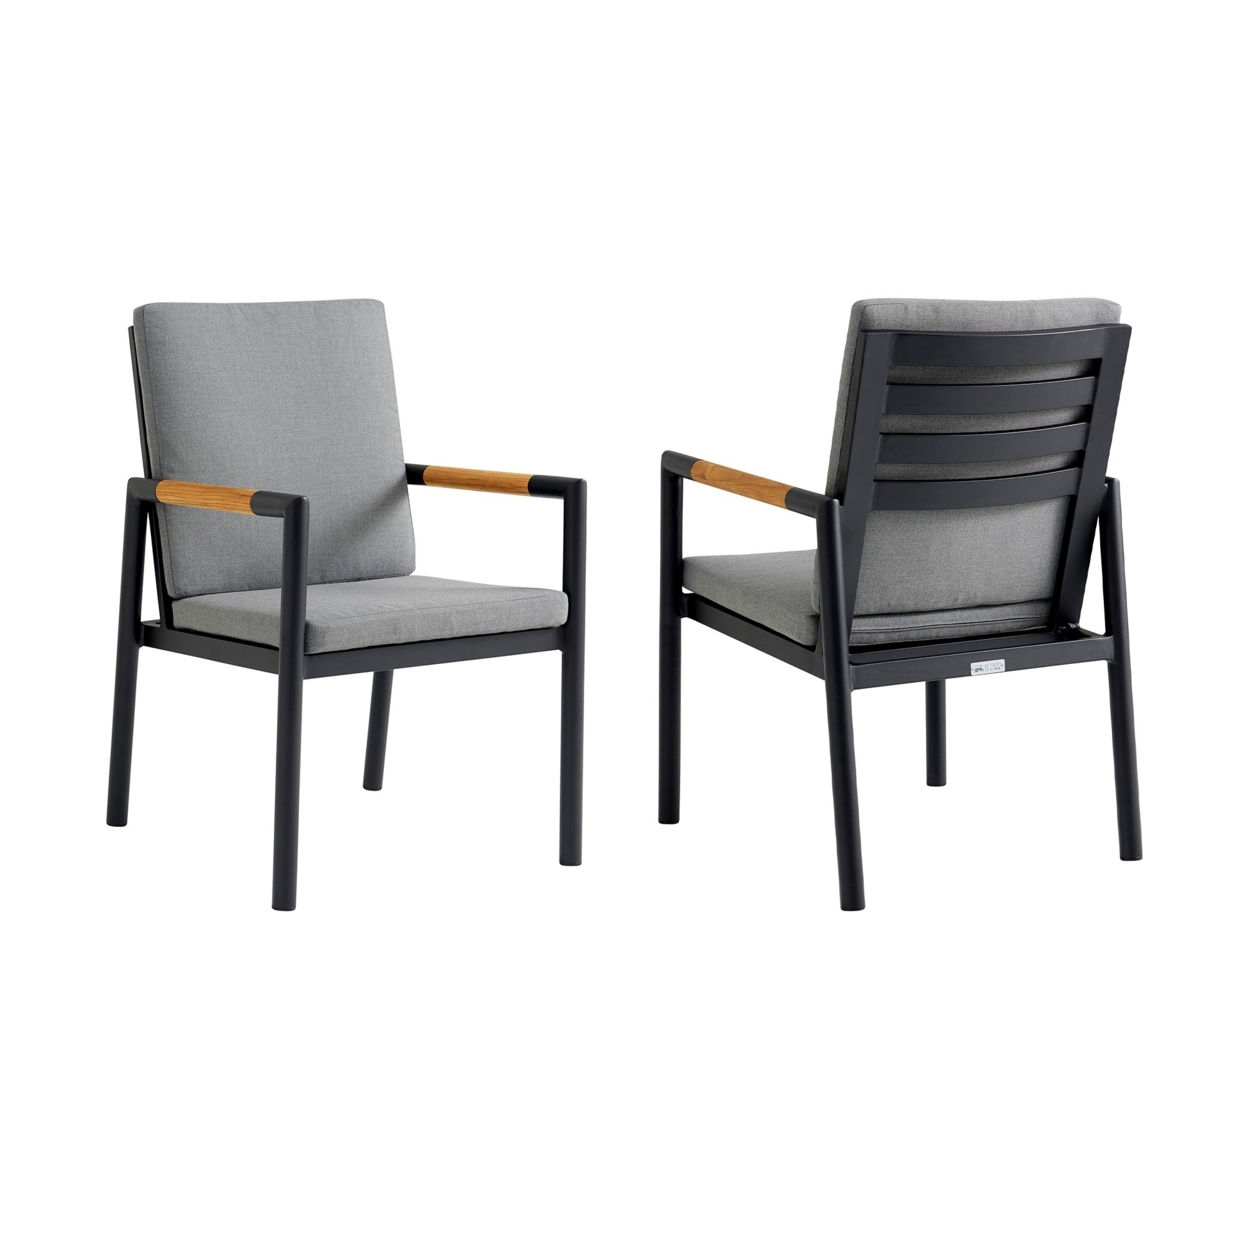 Dex 23 Inch Outdoor Dining Chair, Set Of 2, Dark Gray Cushions, Black Frame- Saltoro Sherpi